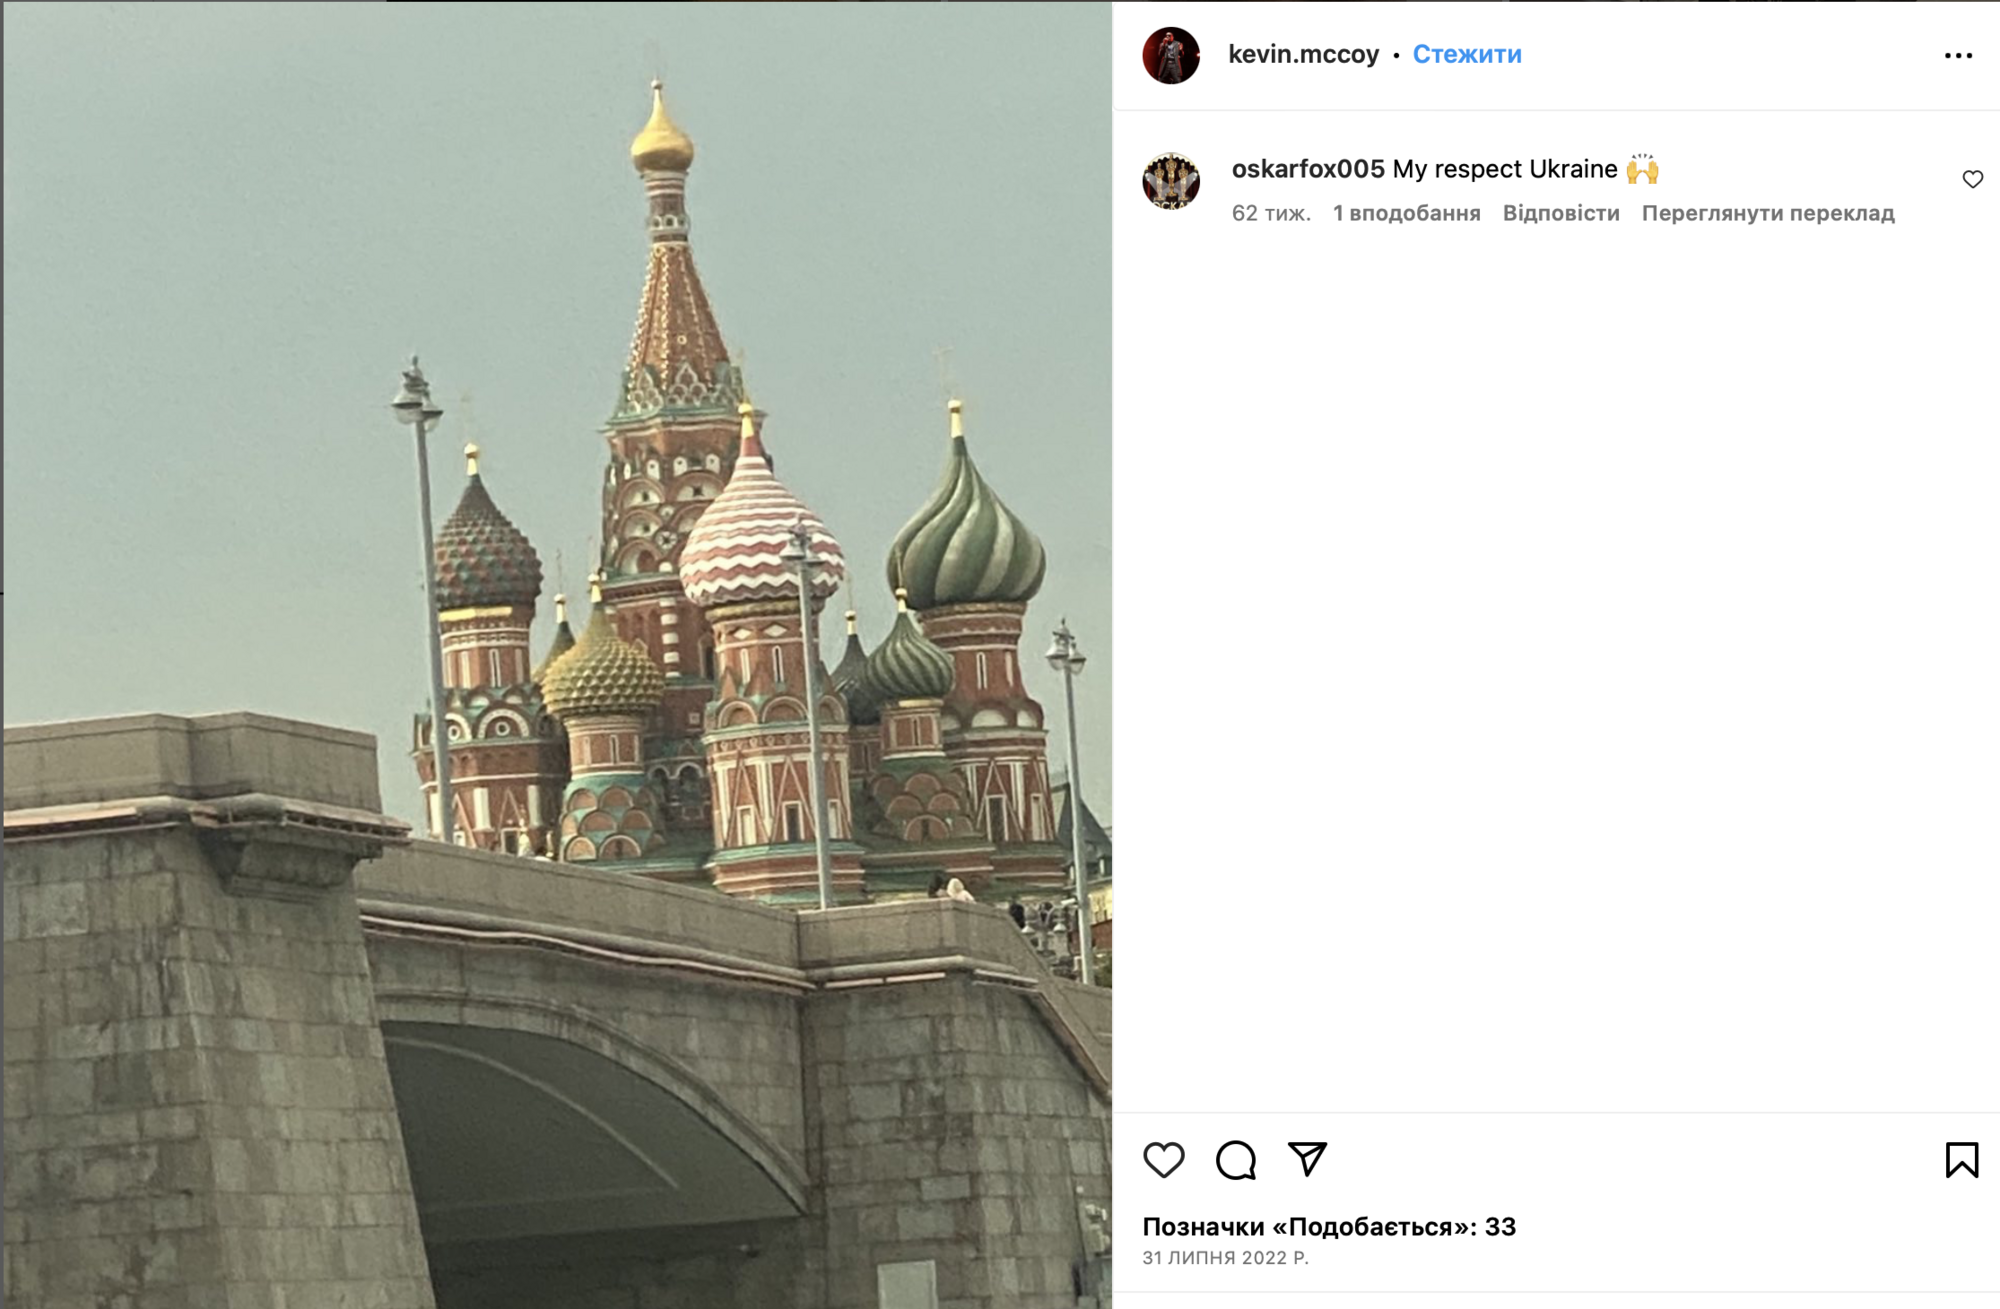 Former Bad Boys Blue singer professes love for Russia after strange statement about Ukraine, but Putin still won't grant him citizenship